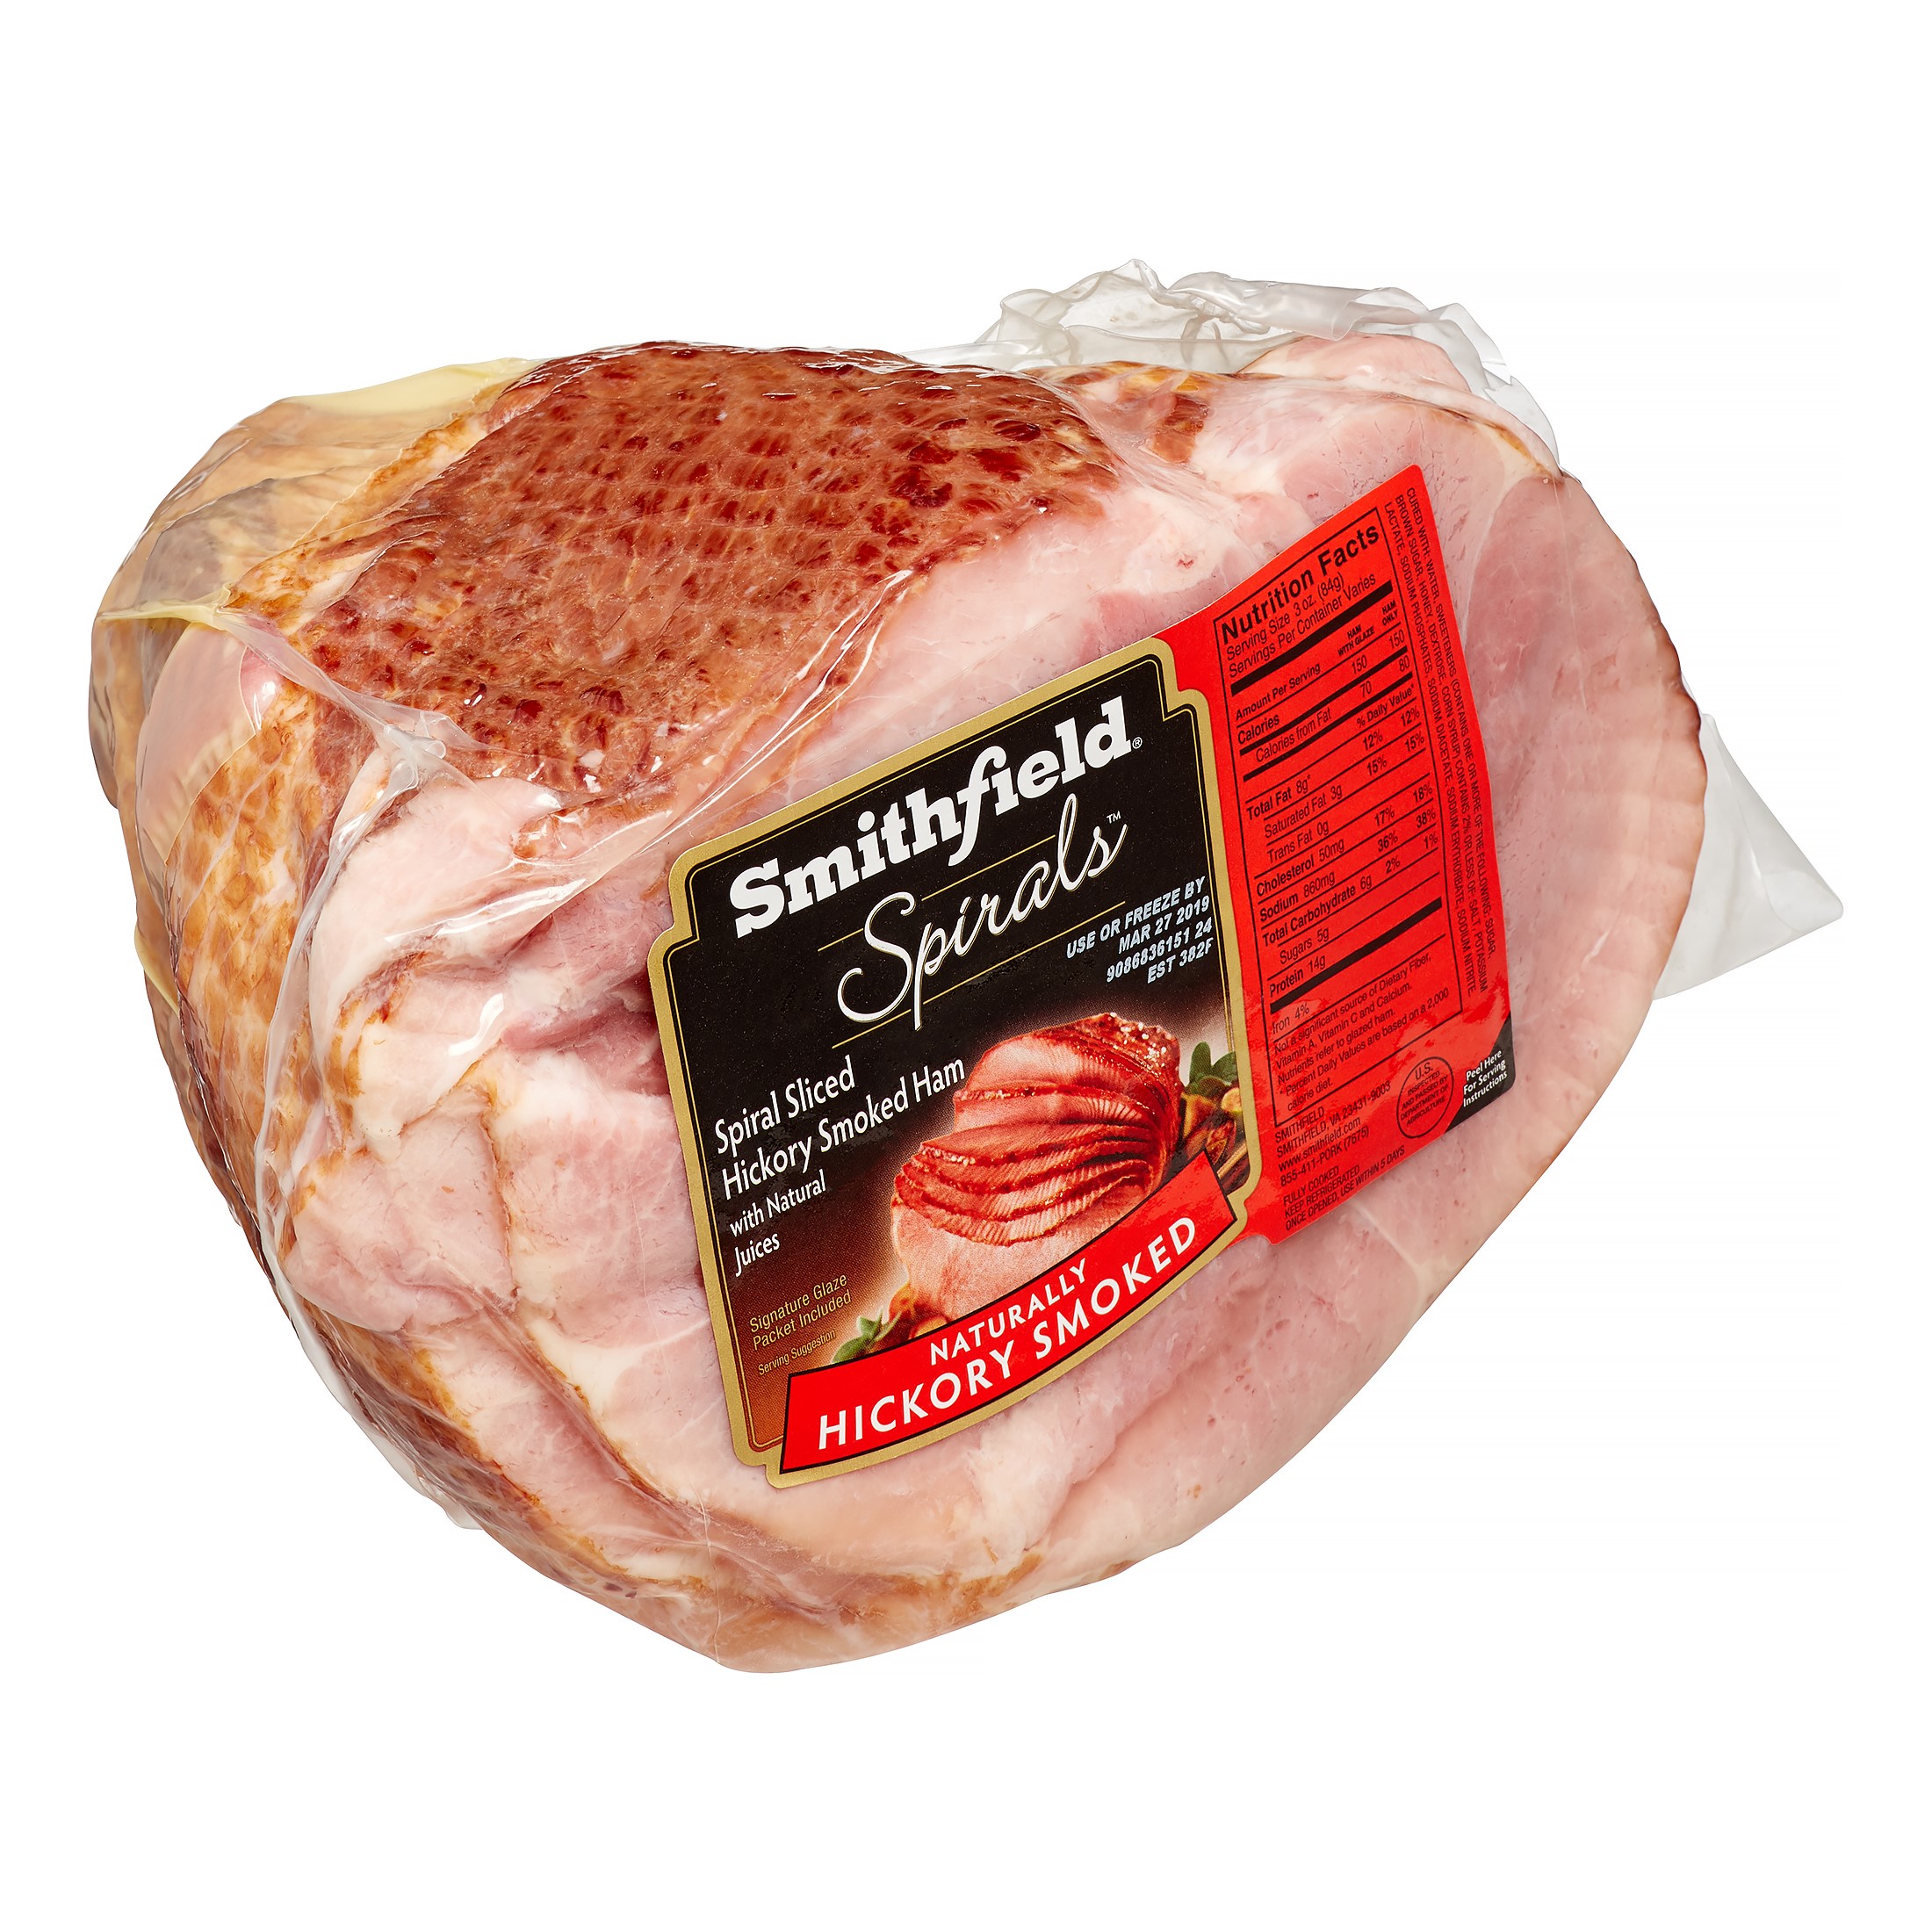 Smithfield Hickory Smoked Spiral Sliced Ham, 10.35-10.43 lb - image 5 of 8